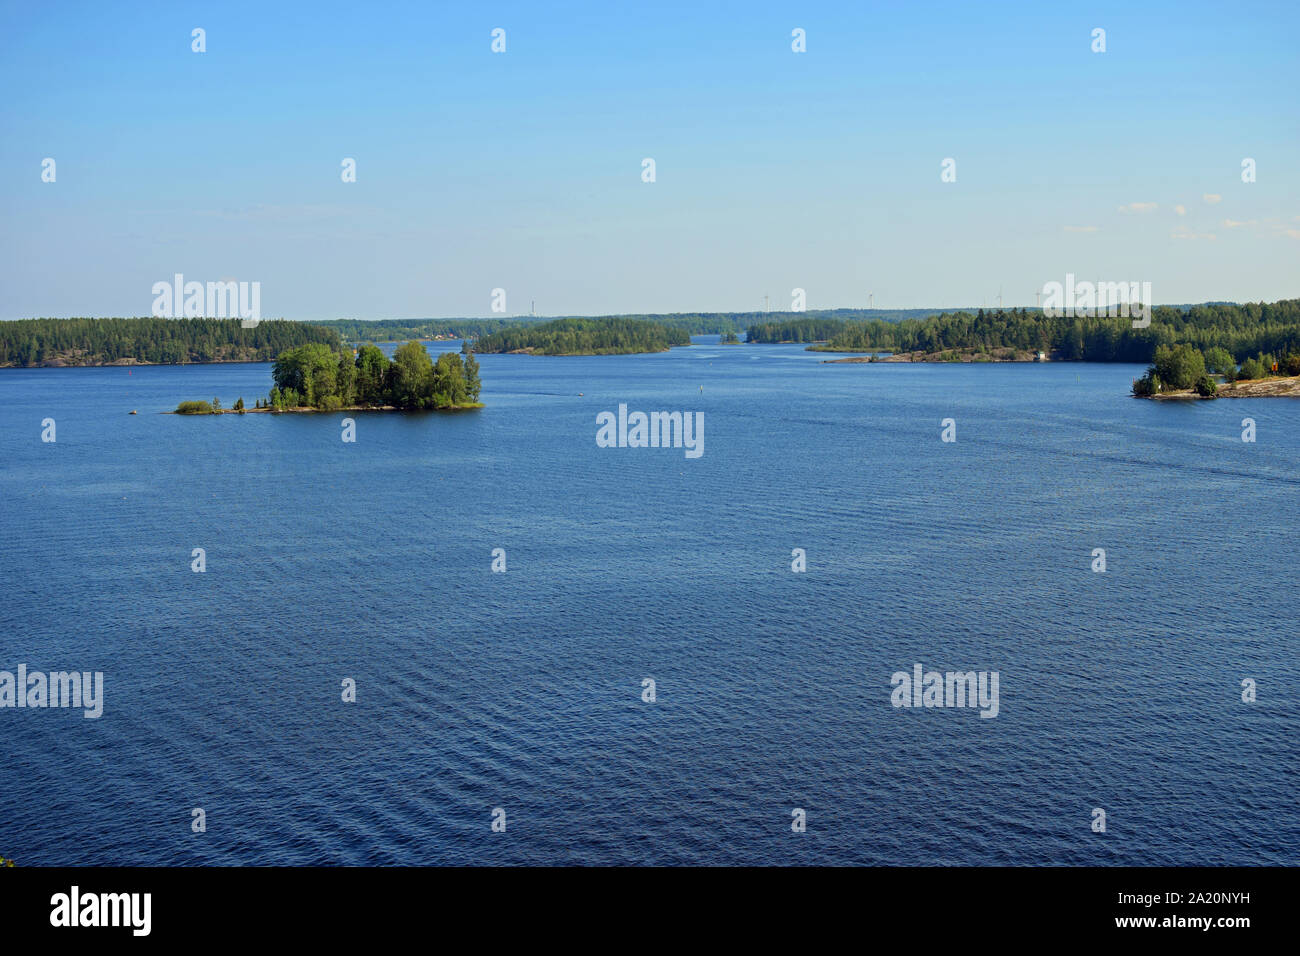 Paesaggio sul Lago Saimaa dal ponte Luukkaansalmi a Lappeenranta, Finlandia. Foto Stock